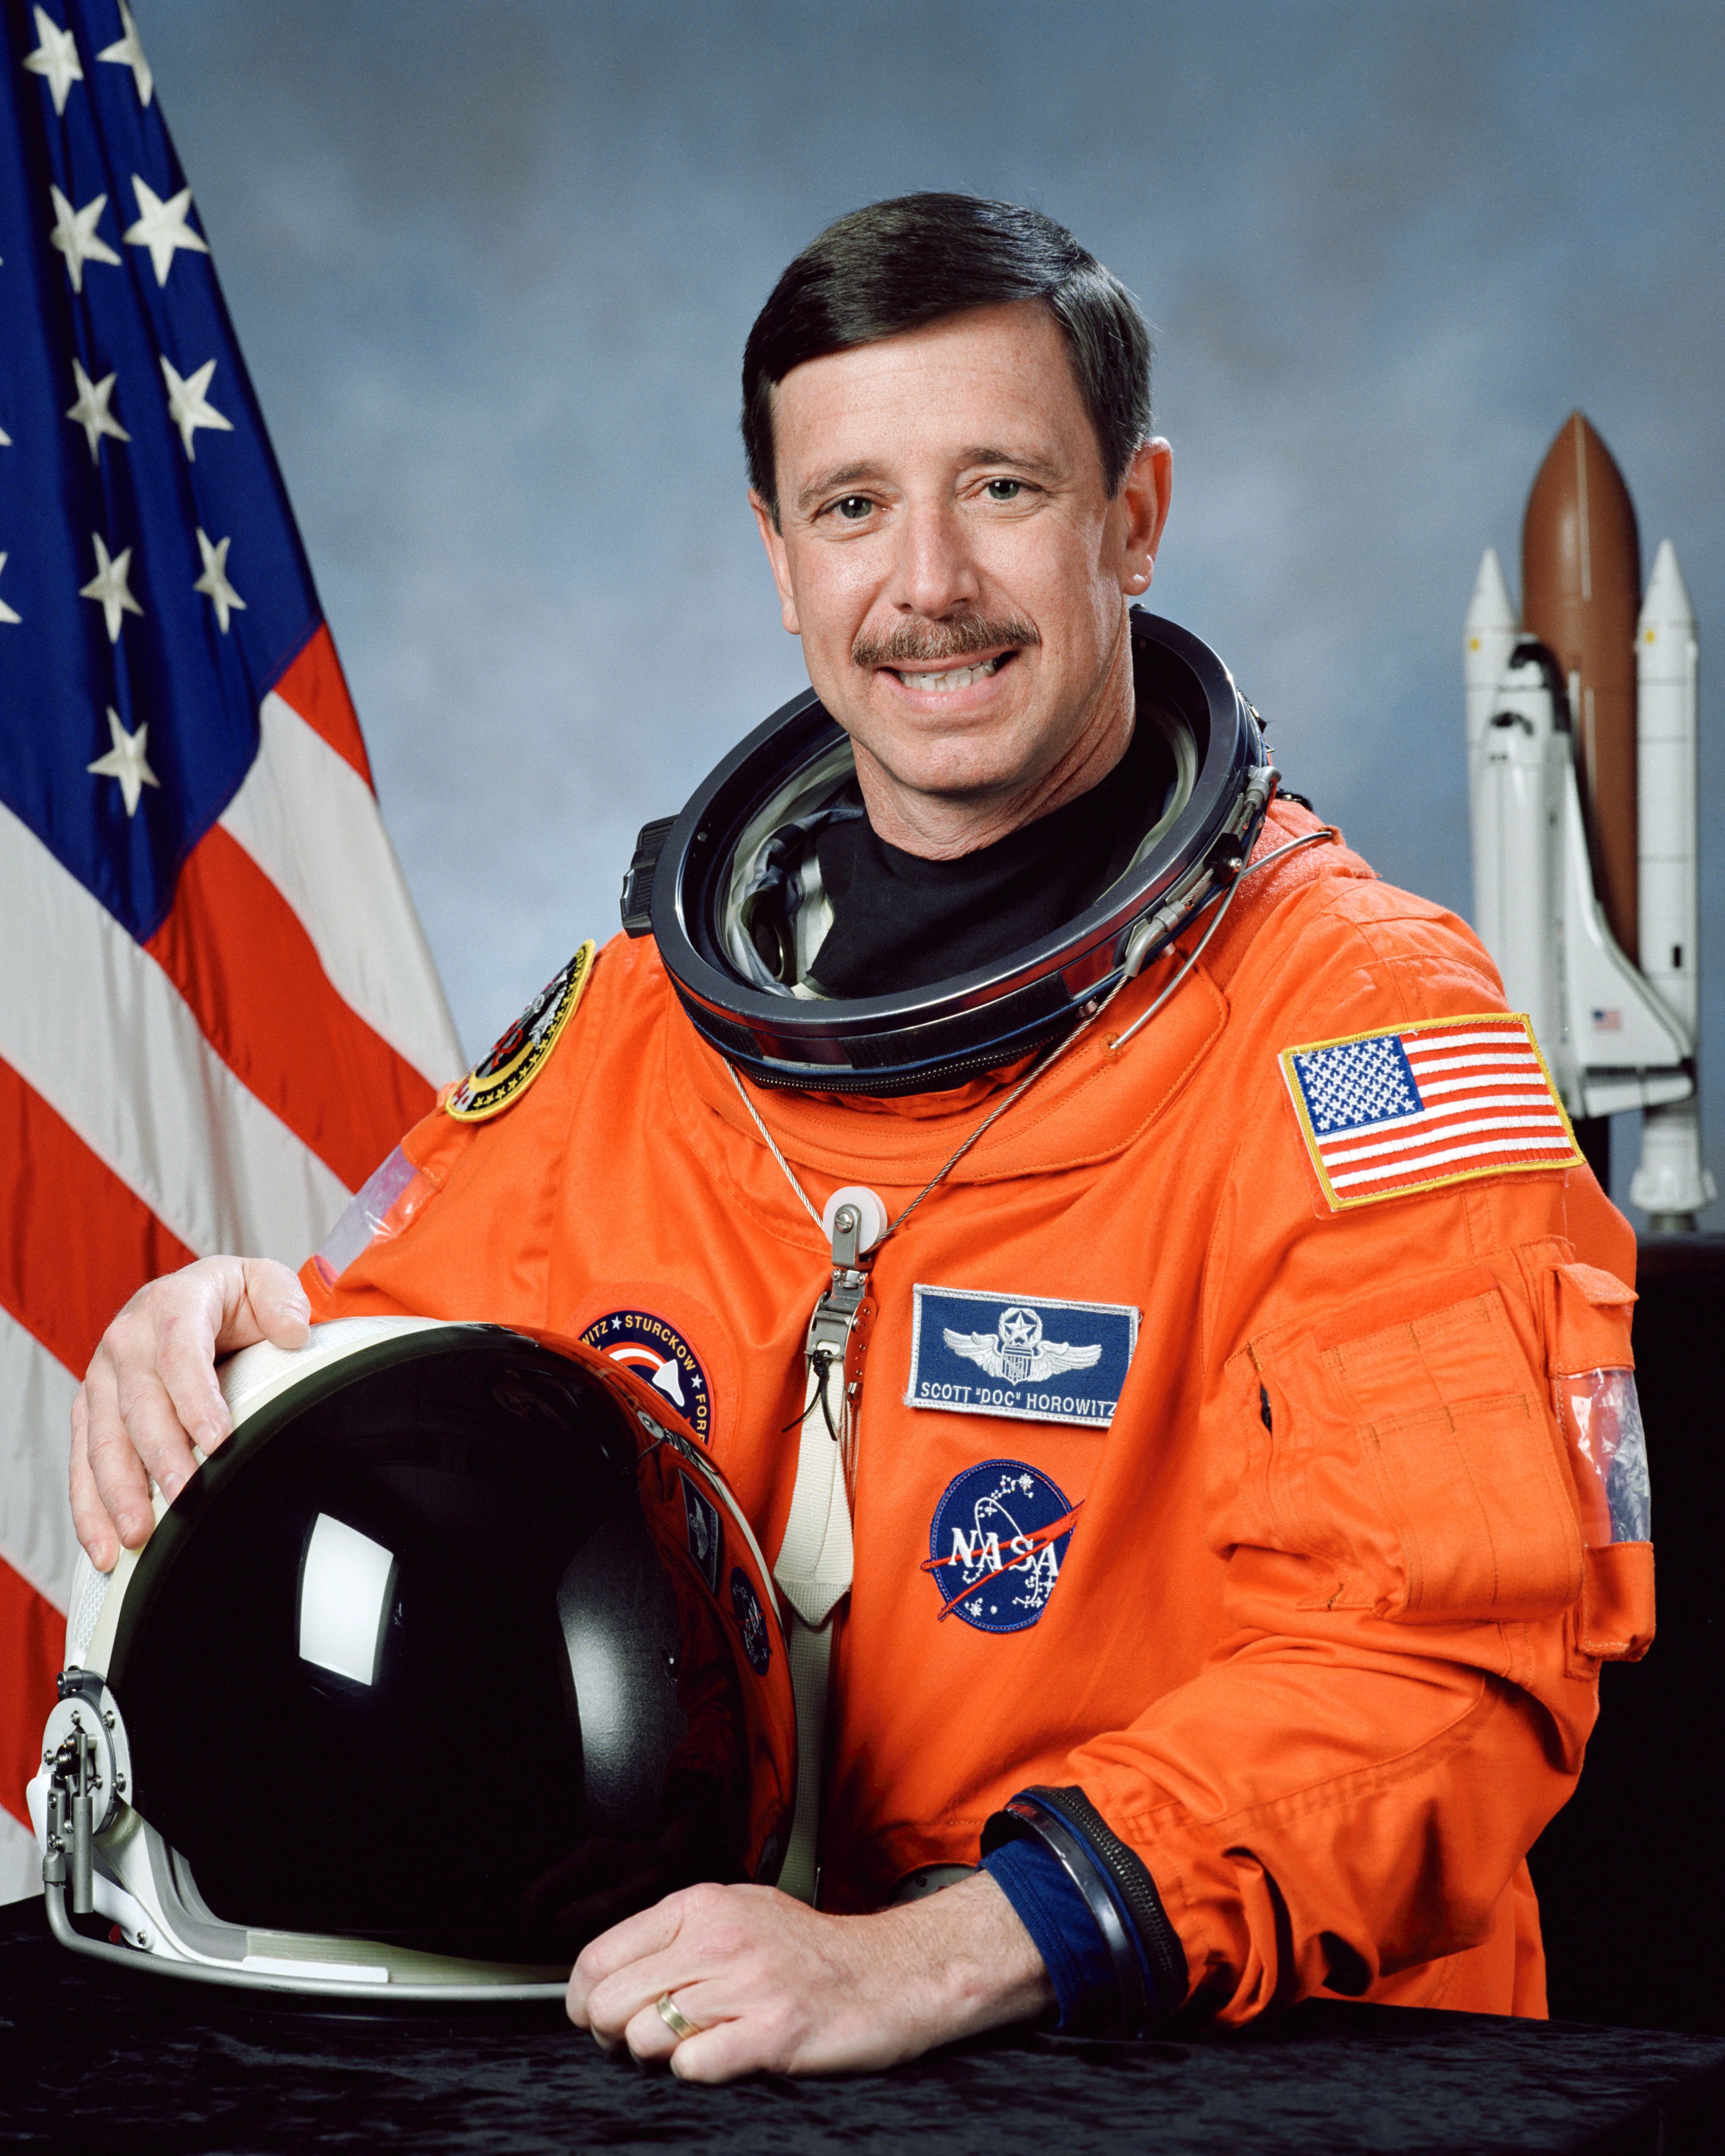 Official astronaut portrait of Scott Horowitz.